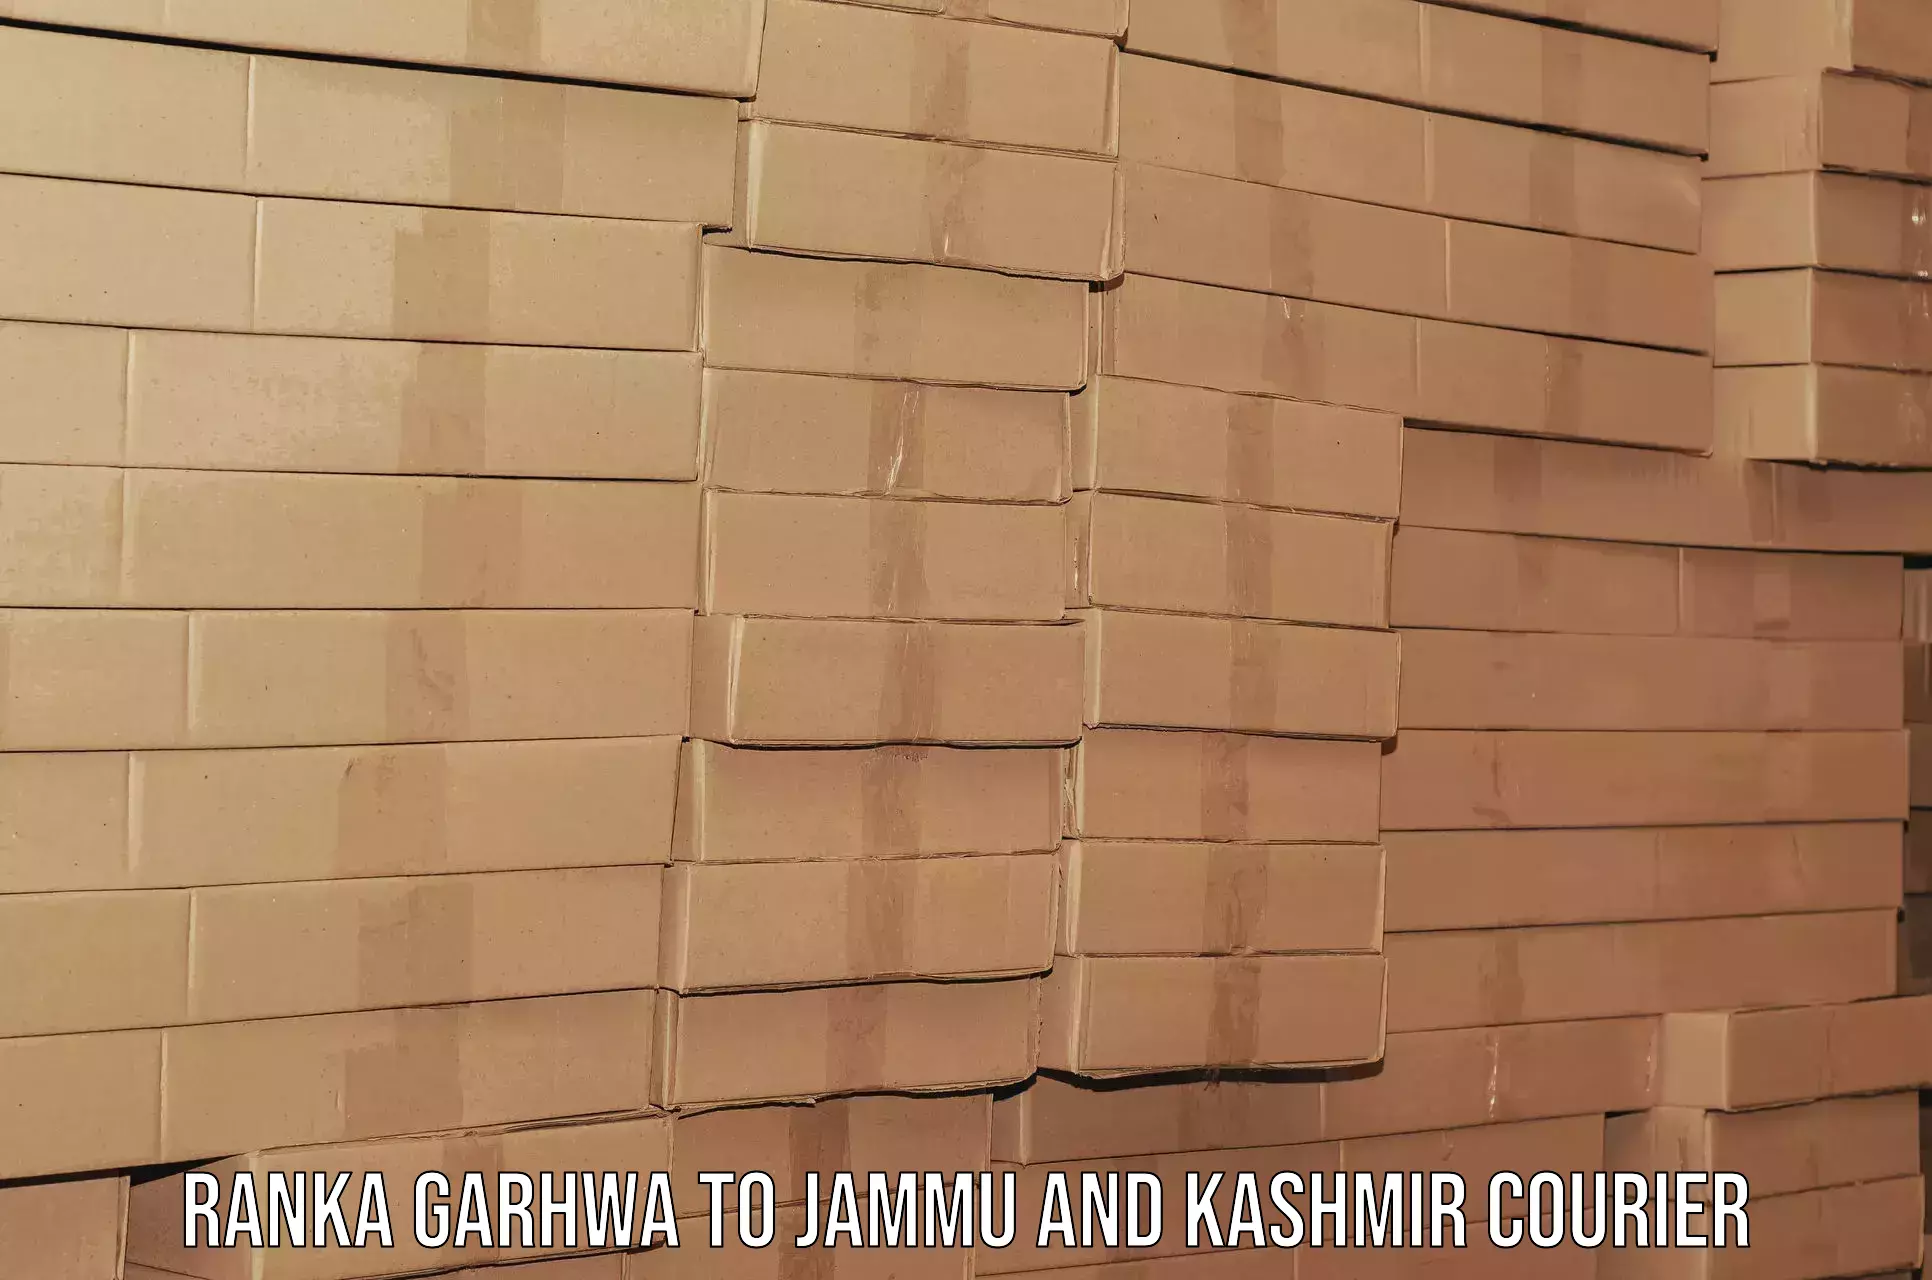 Efficient moving and packing Ranka Garhwa to Srinagar Kashmir